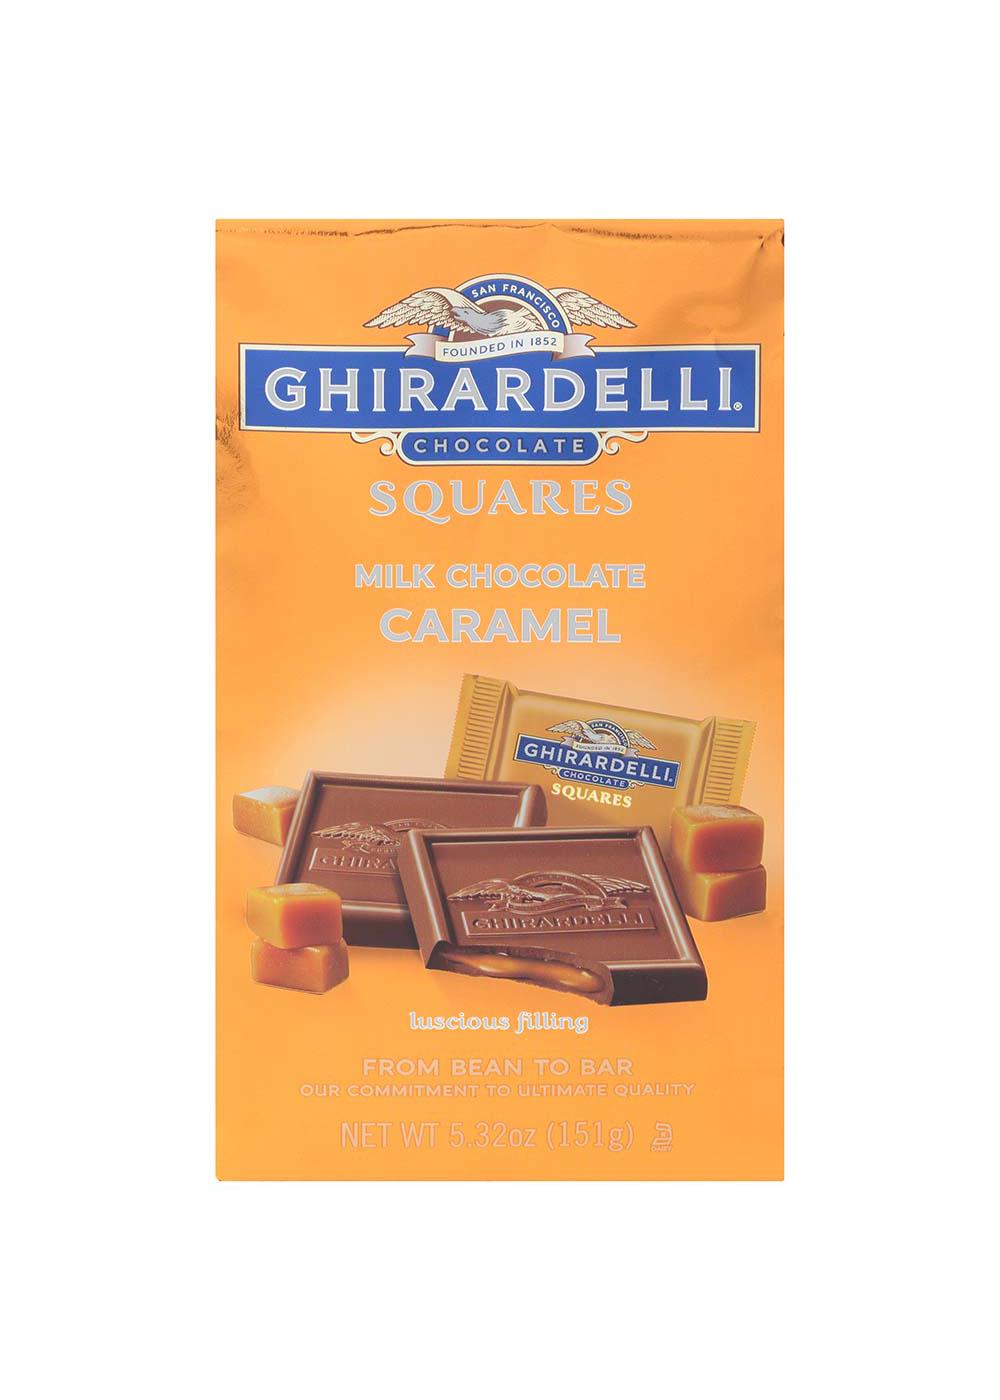 Ghirardelli Milk Chocolate Caramel Squares; image 1 of 7